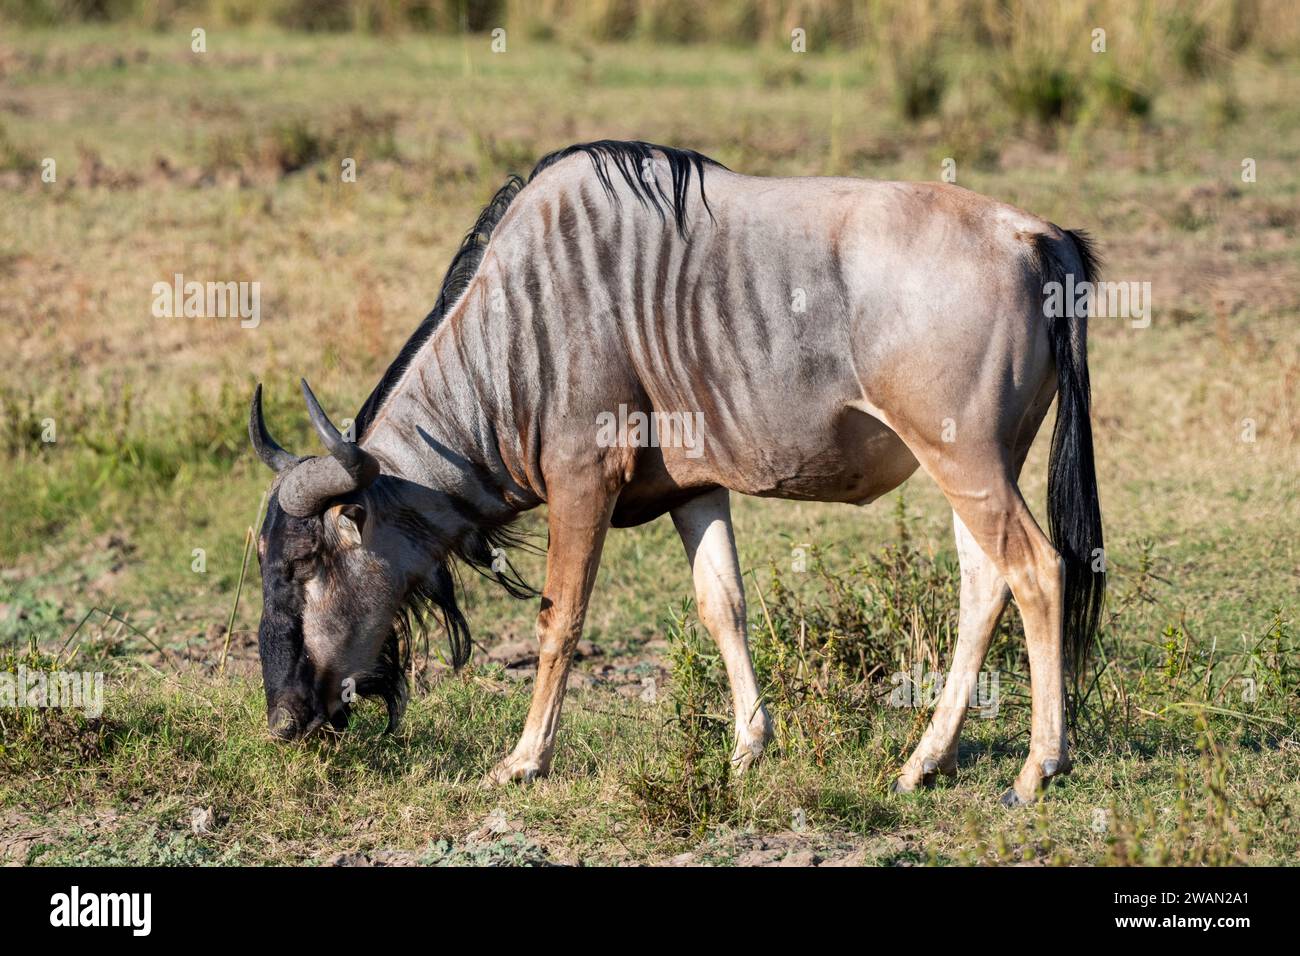 Africa, Zambia, Sud Luangwa. Gli GNU di Cookson (Connochaetes taurinus cooksoni) sottospecie degli GNU blu. Endemica dell'Africa meridionale. Foto Stock